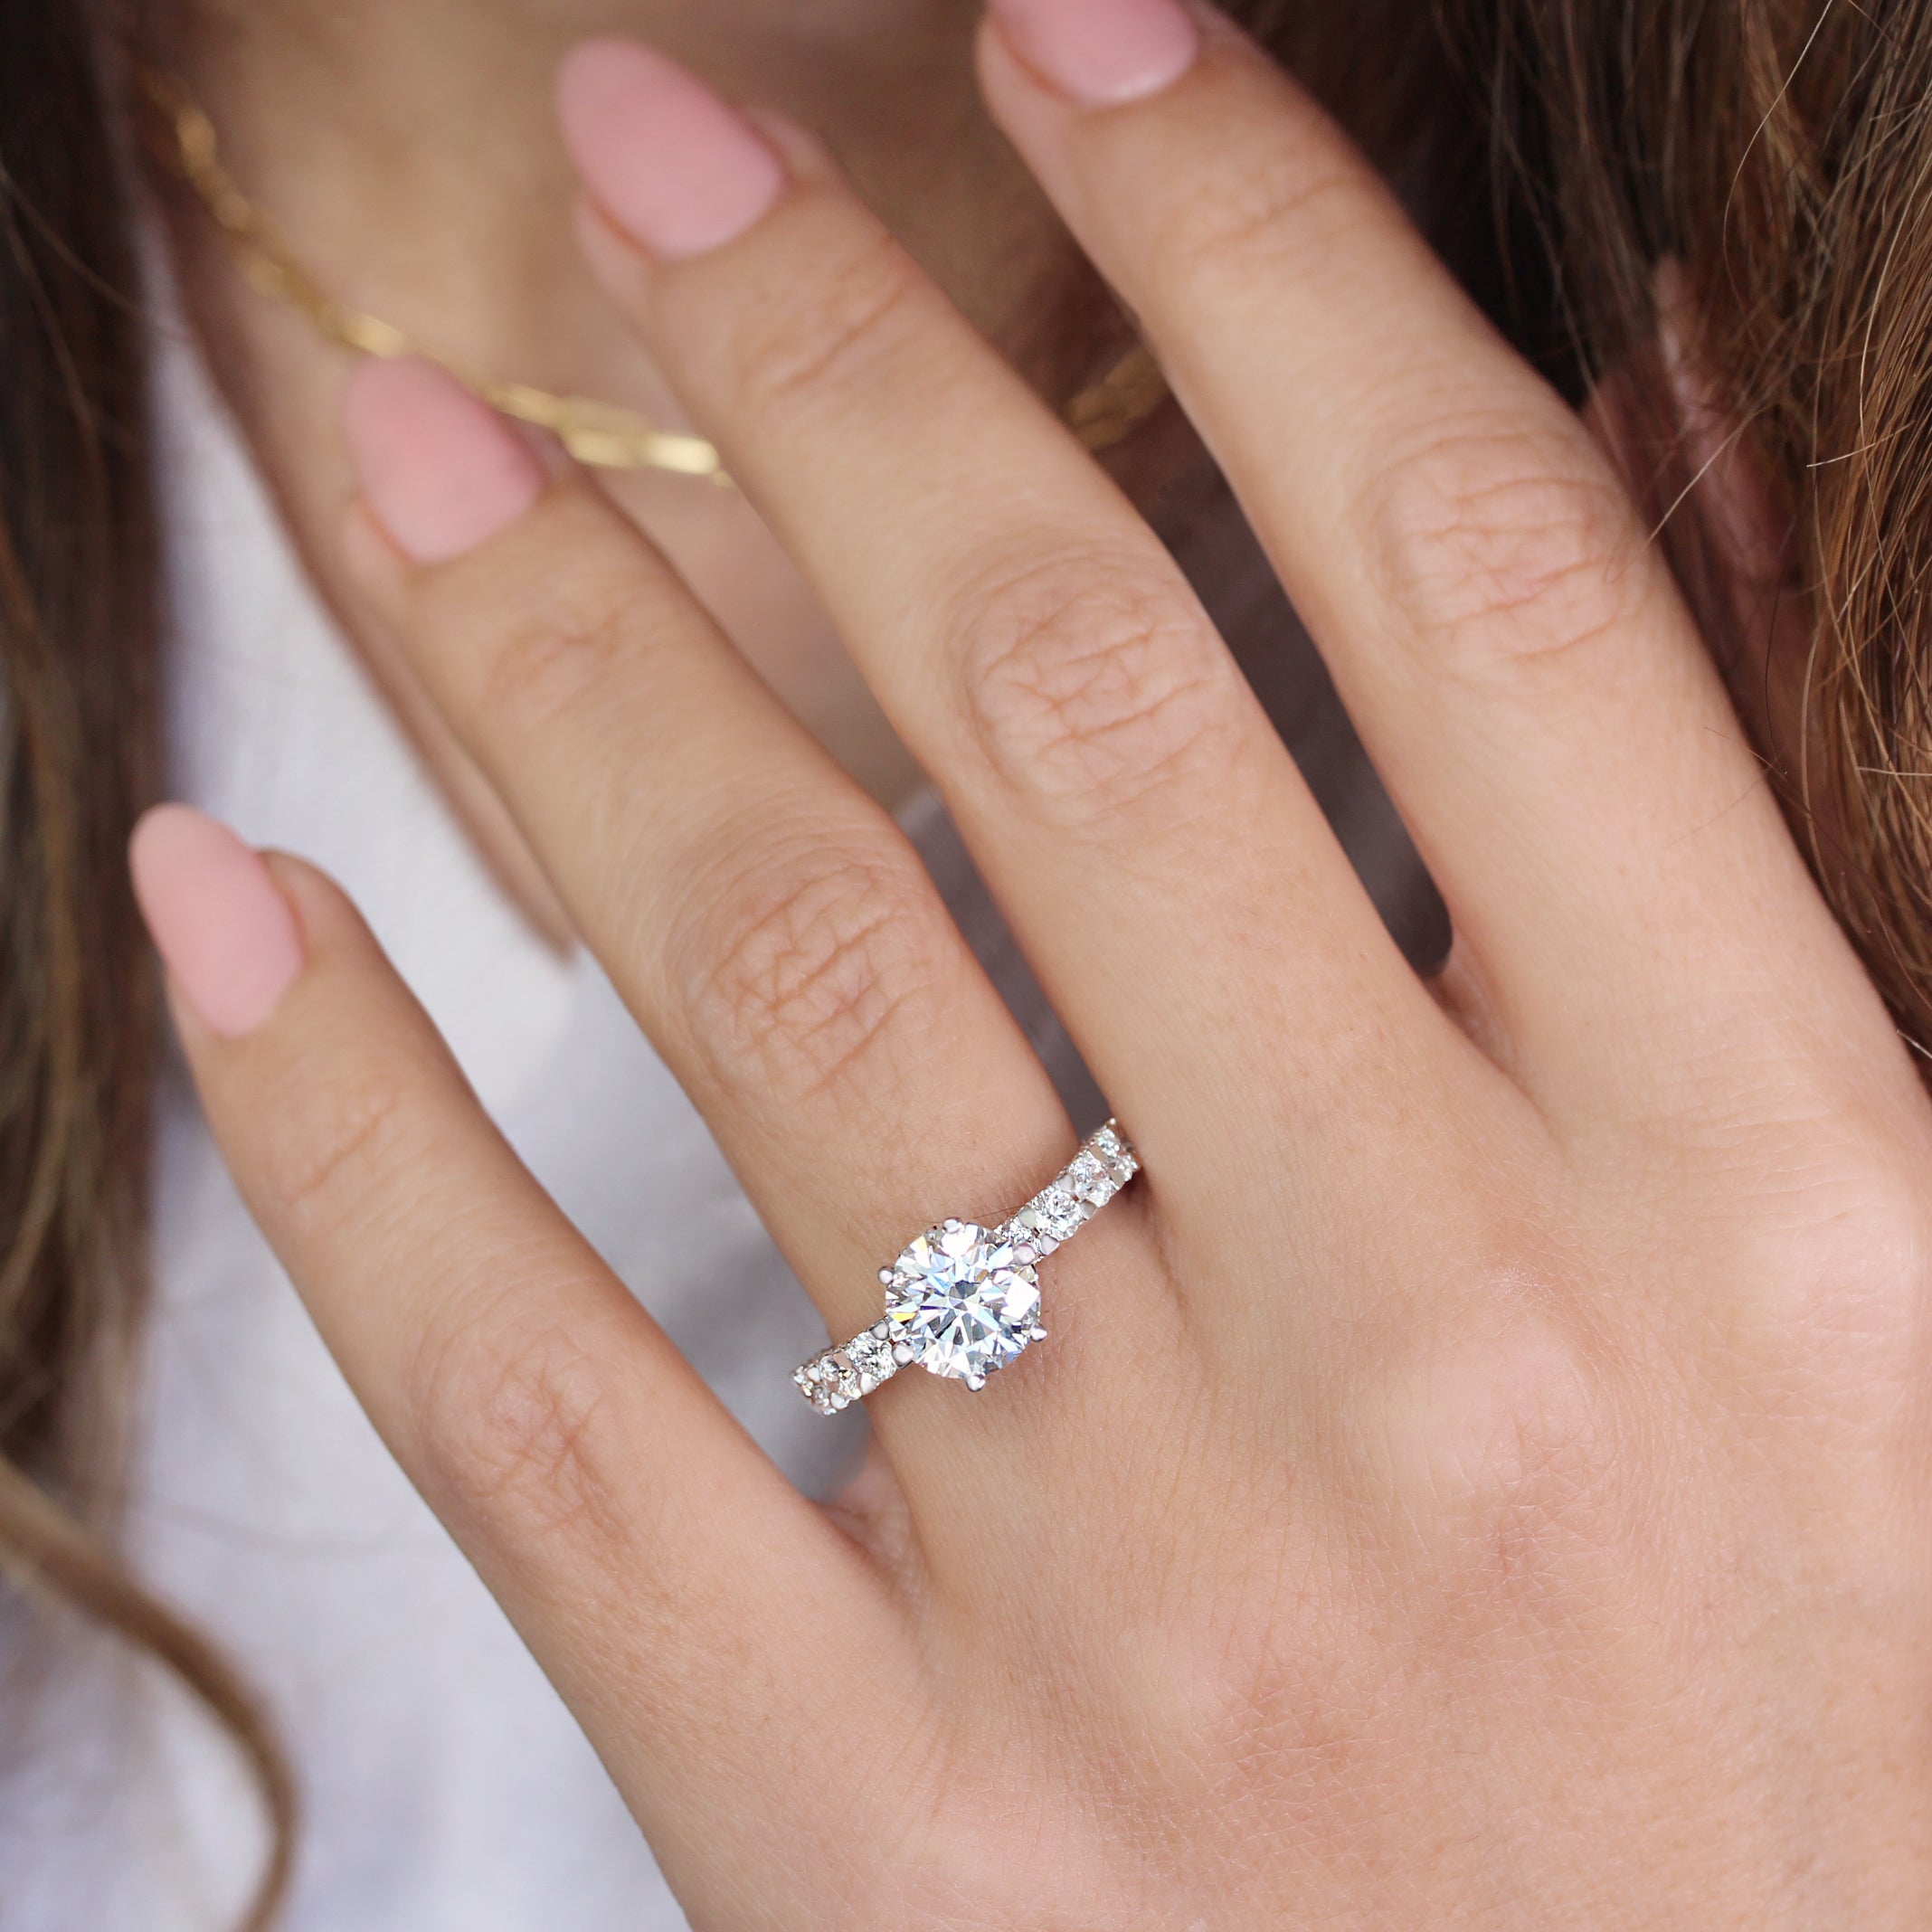 Bermuda : 2 carat oval diamond engagement ring | Nature Sparkle